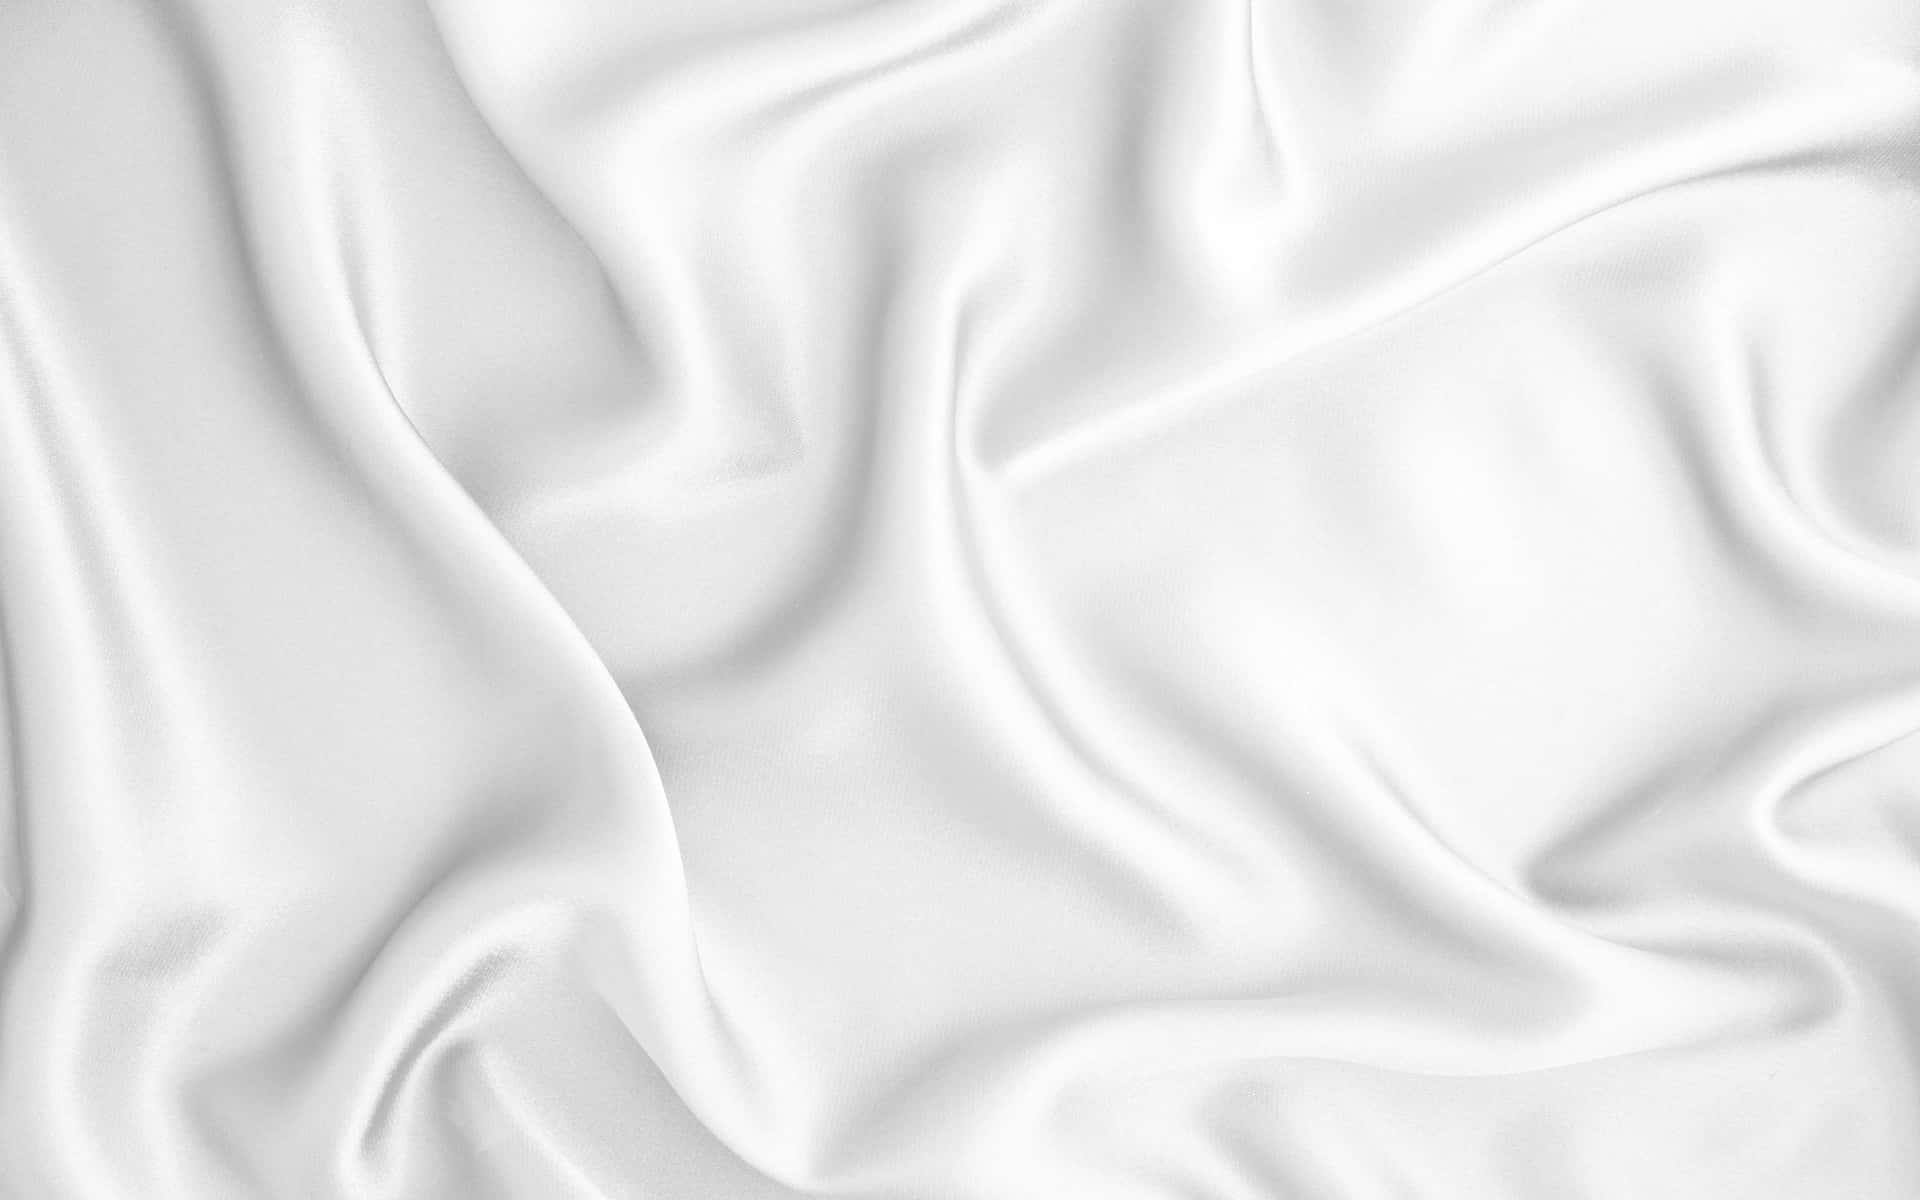 Wavy Folds Satin Fabric White Texture Background